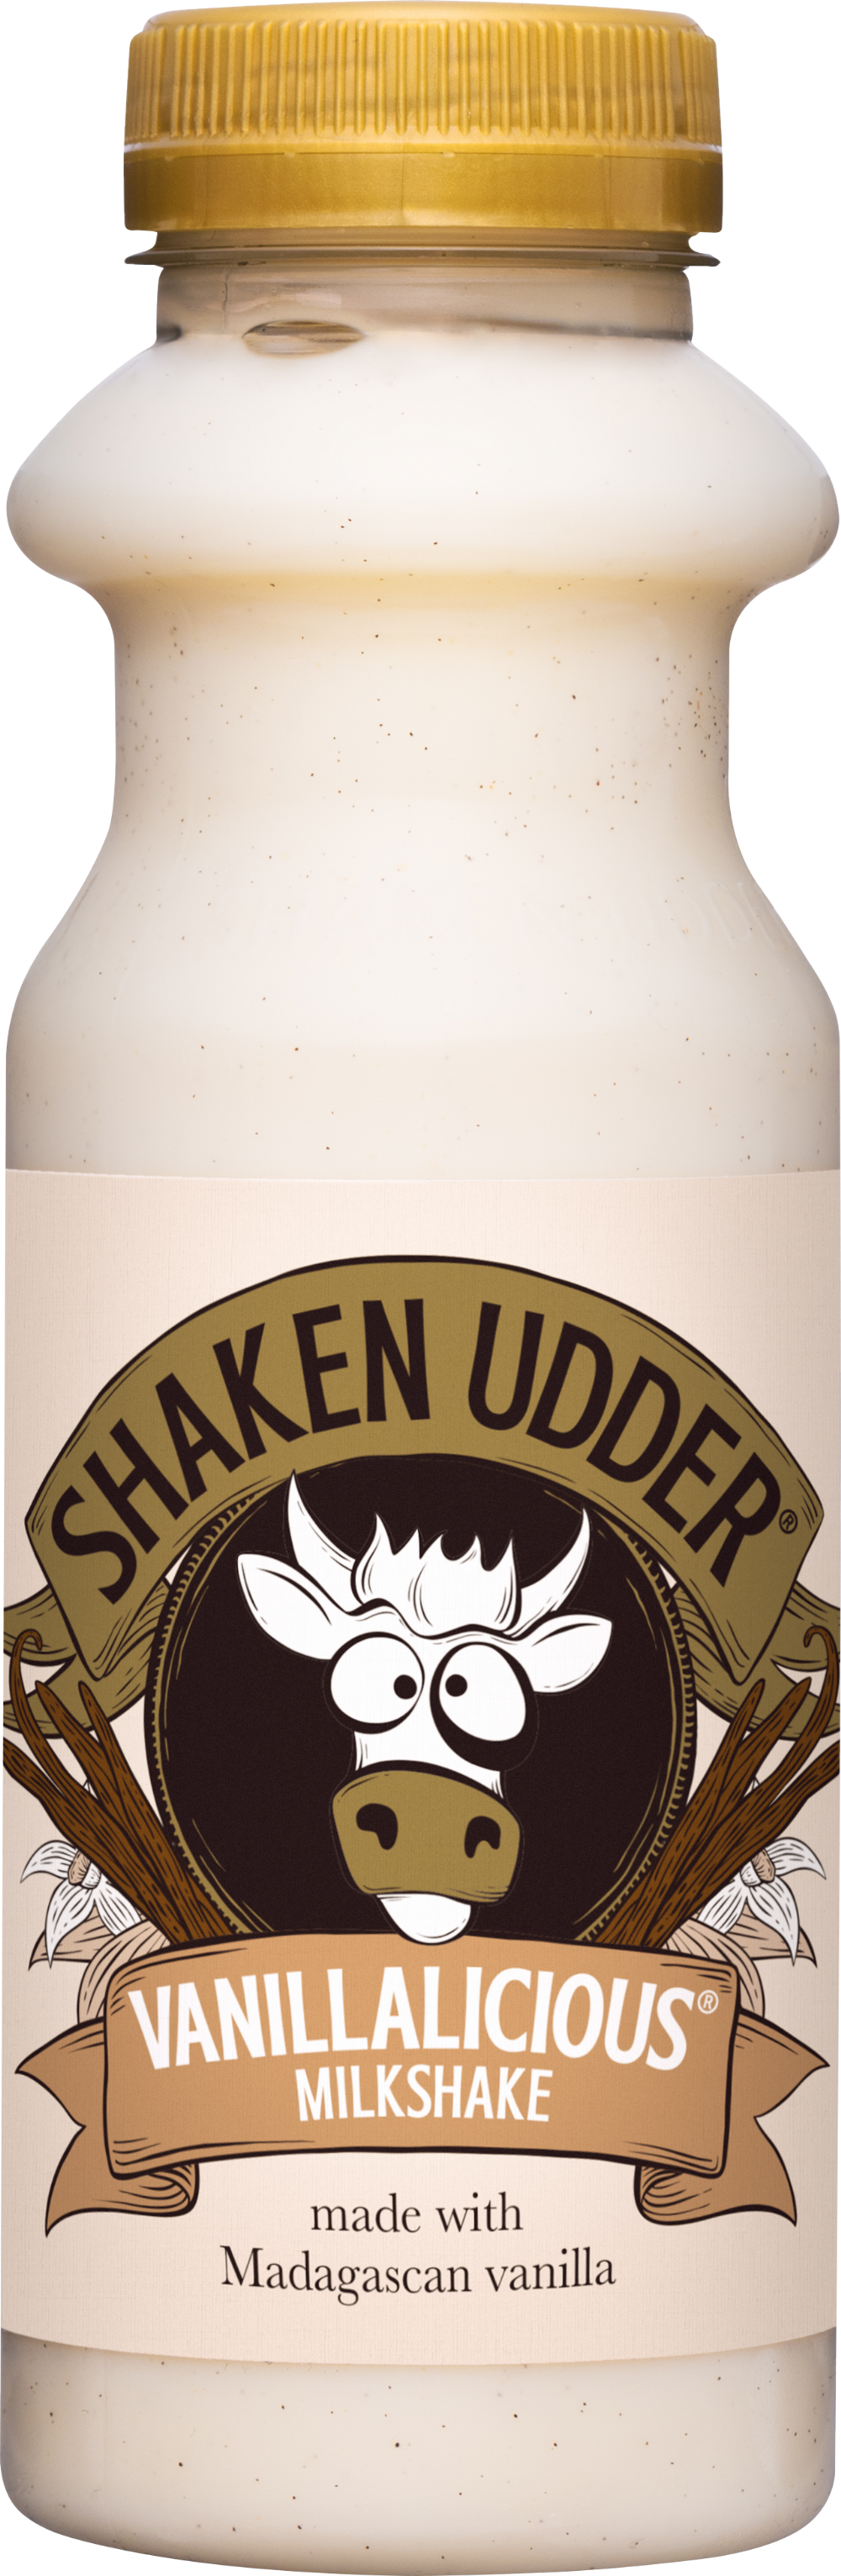 SHAKEN UDDER Vanillalicious! Milkshake - Bottle 330ml